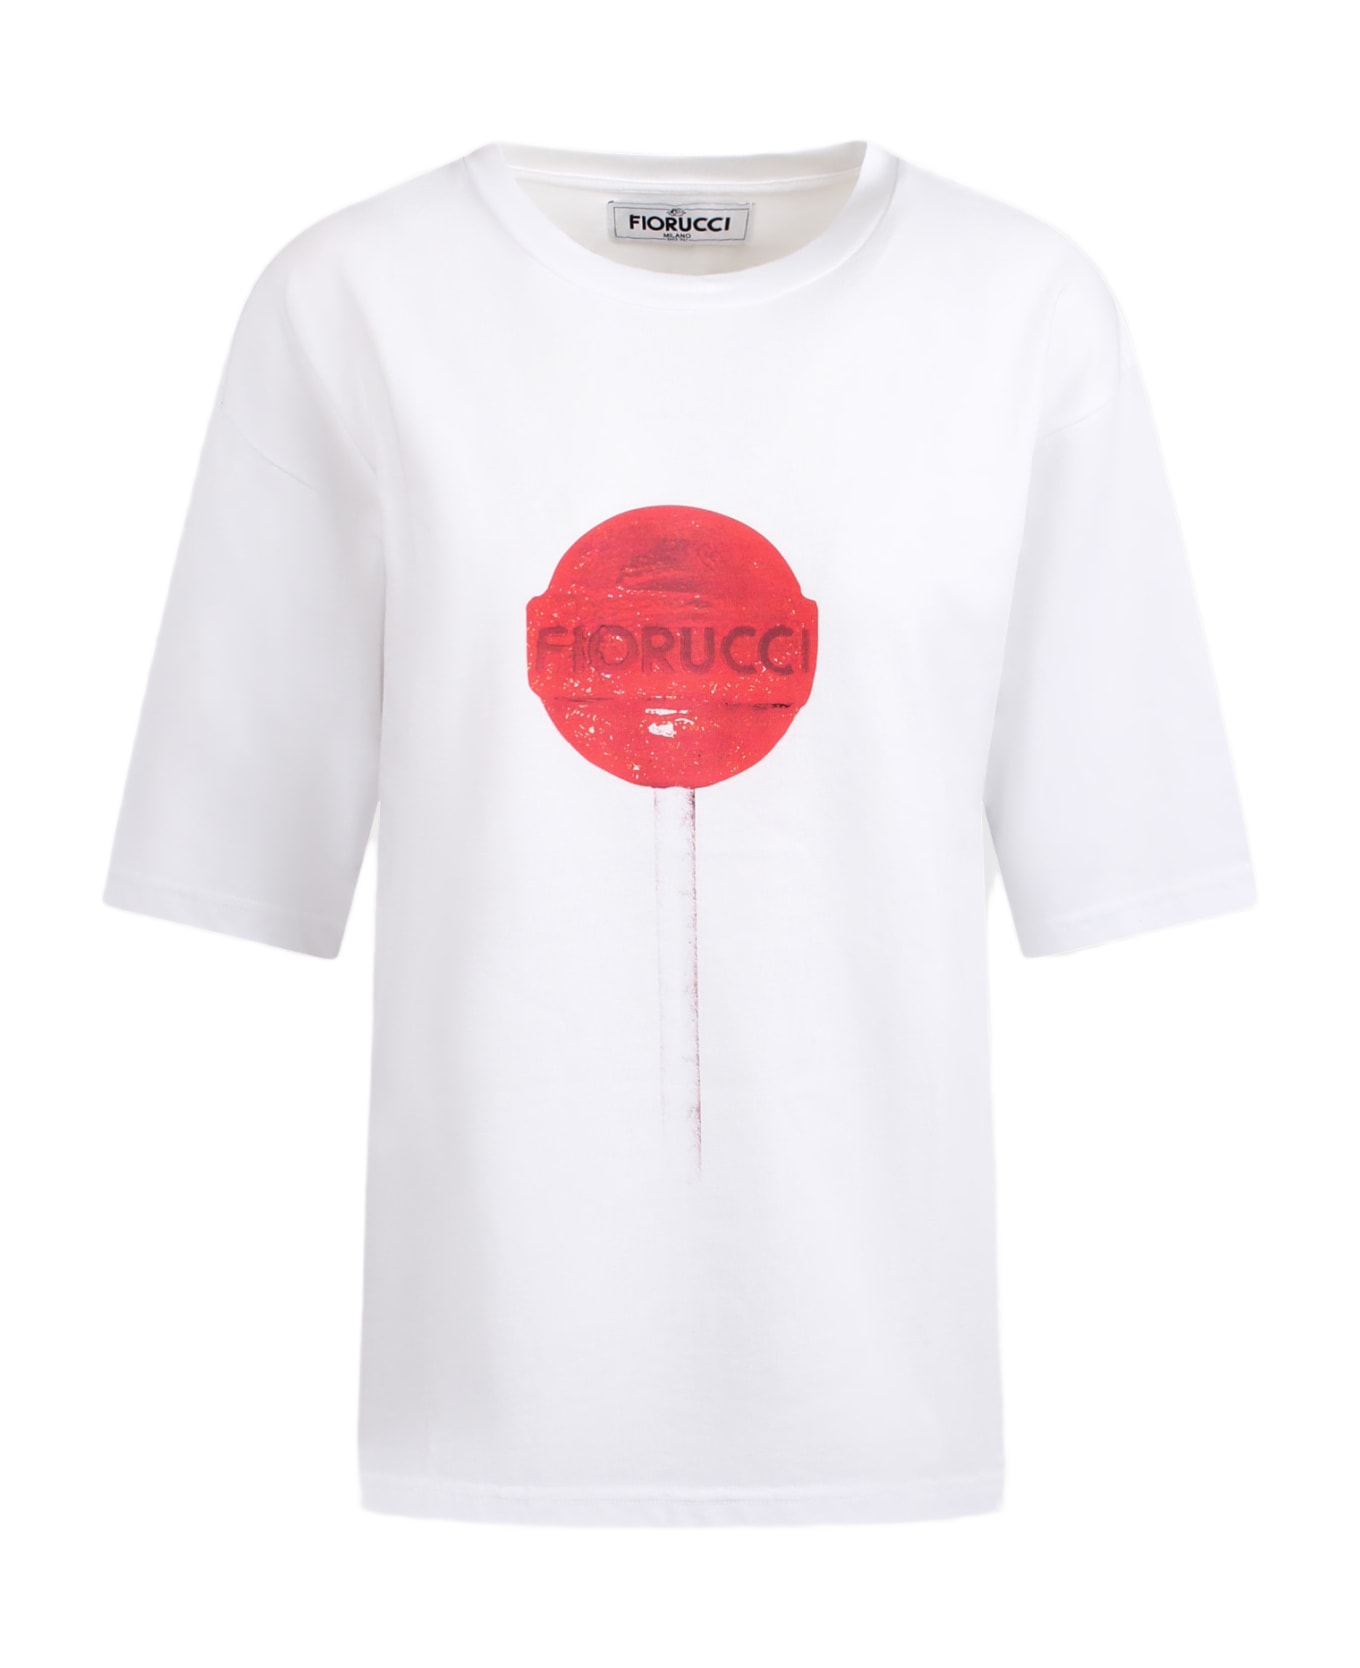 Fiorucci T-shirt With Lollipop Print Tシャツ